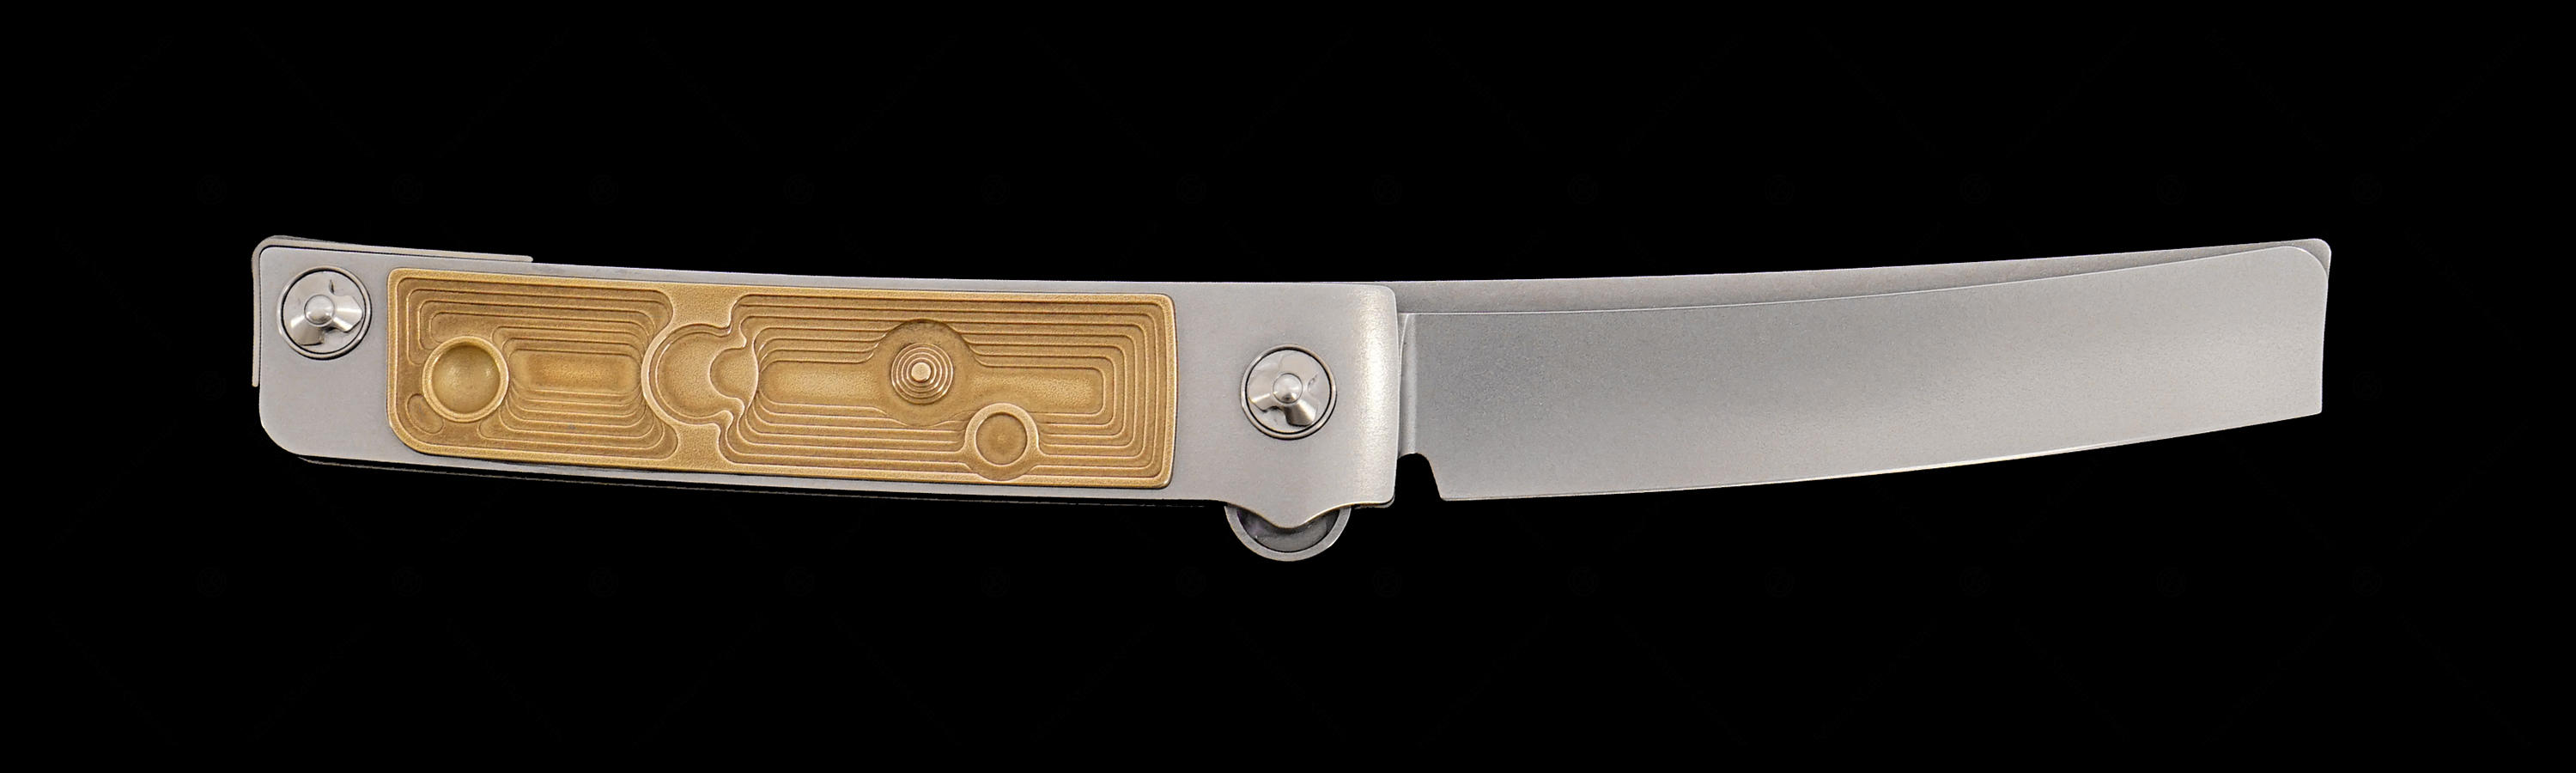 Клинок ножа Барбер из стали RWL-34